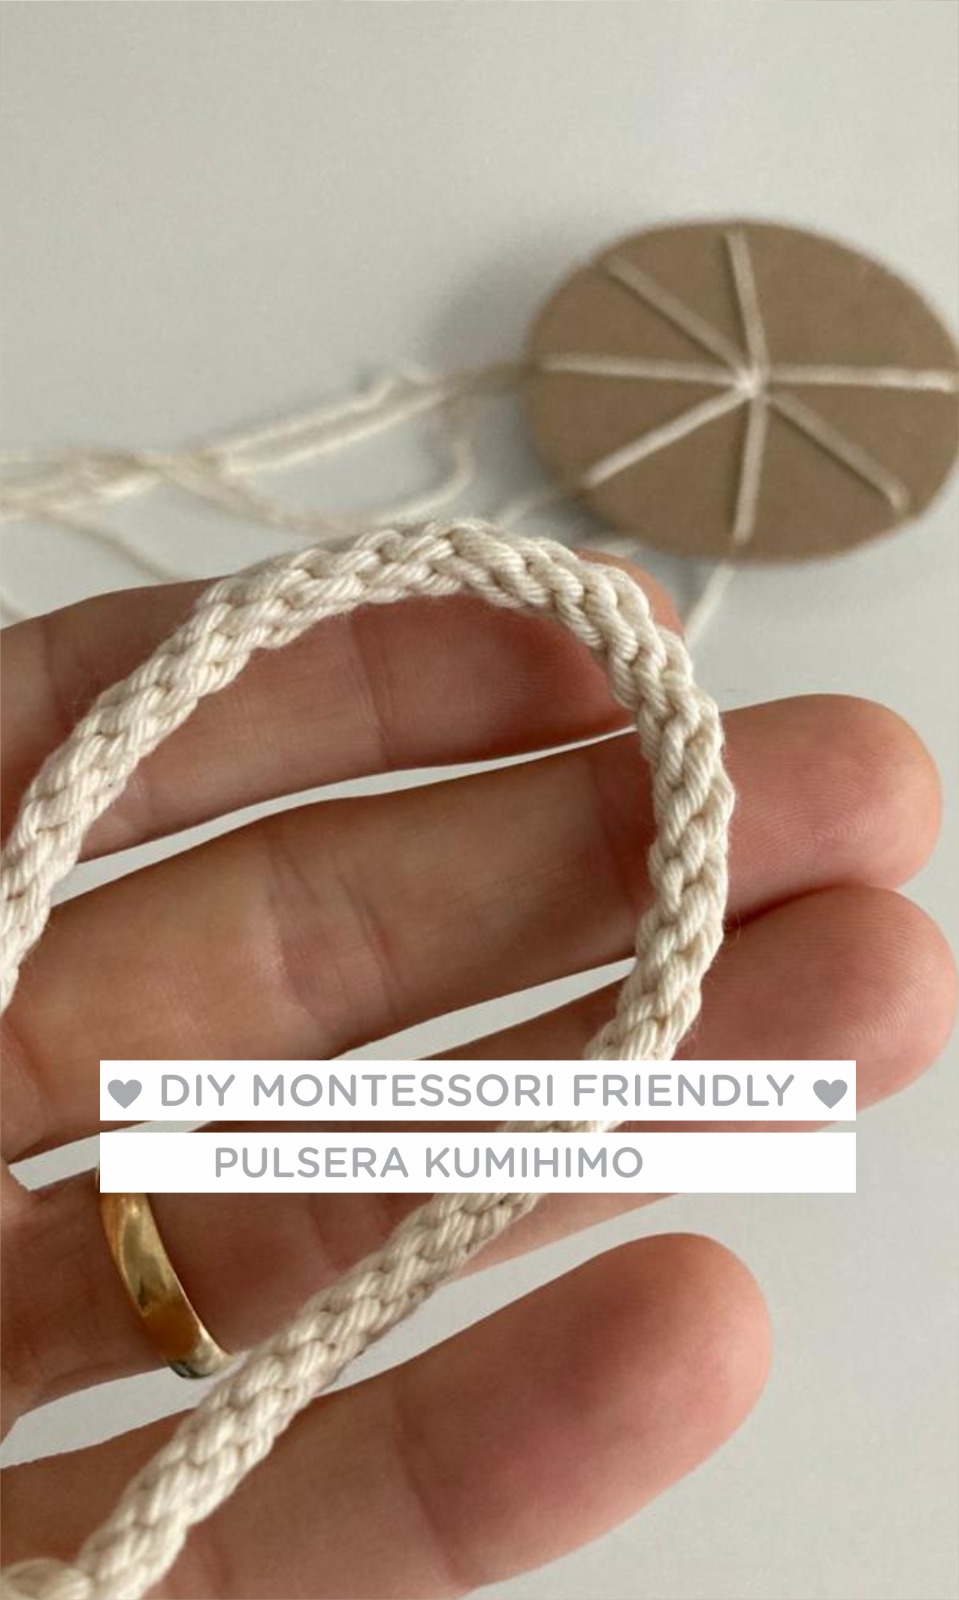 DIY MONTESSORI FRIENDLY: PULSERA KUMIHIMO